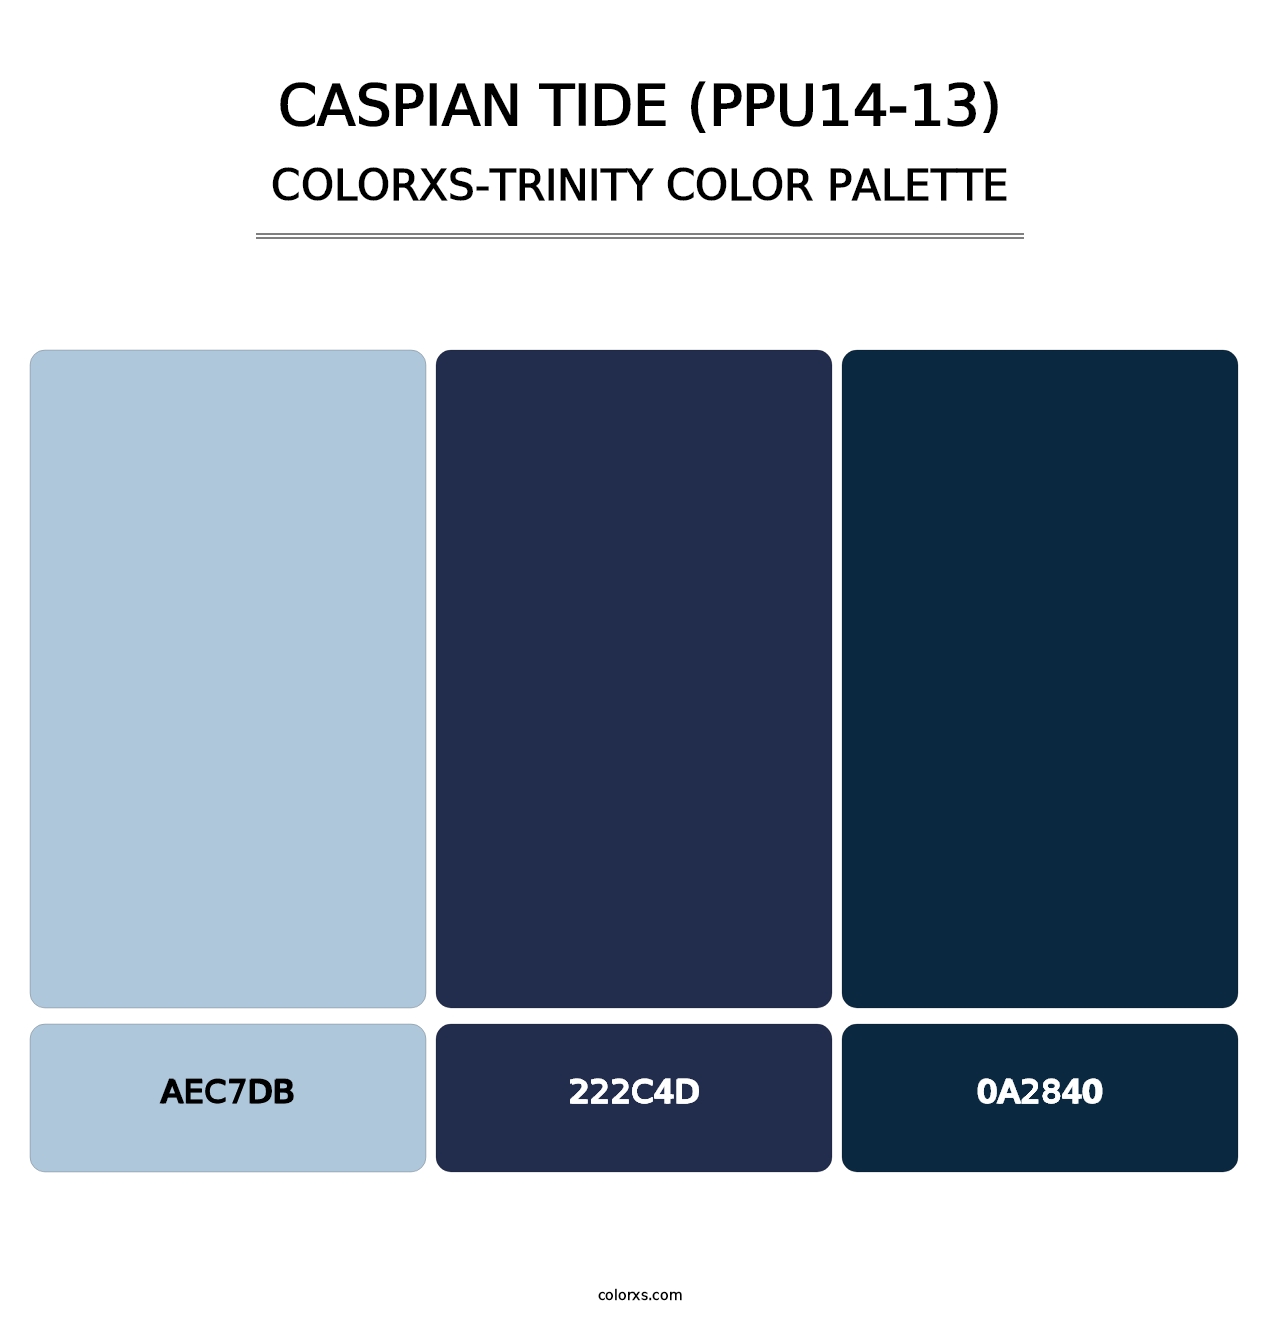 Caspian Tide (PPU14-13) - Colorxs Trinity Palette